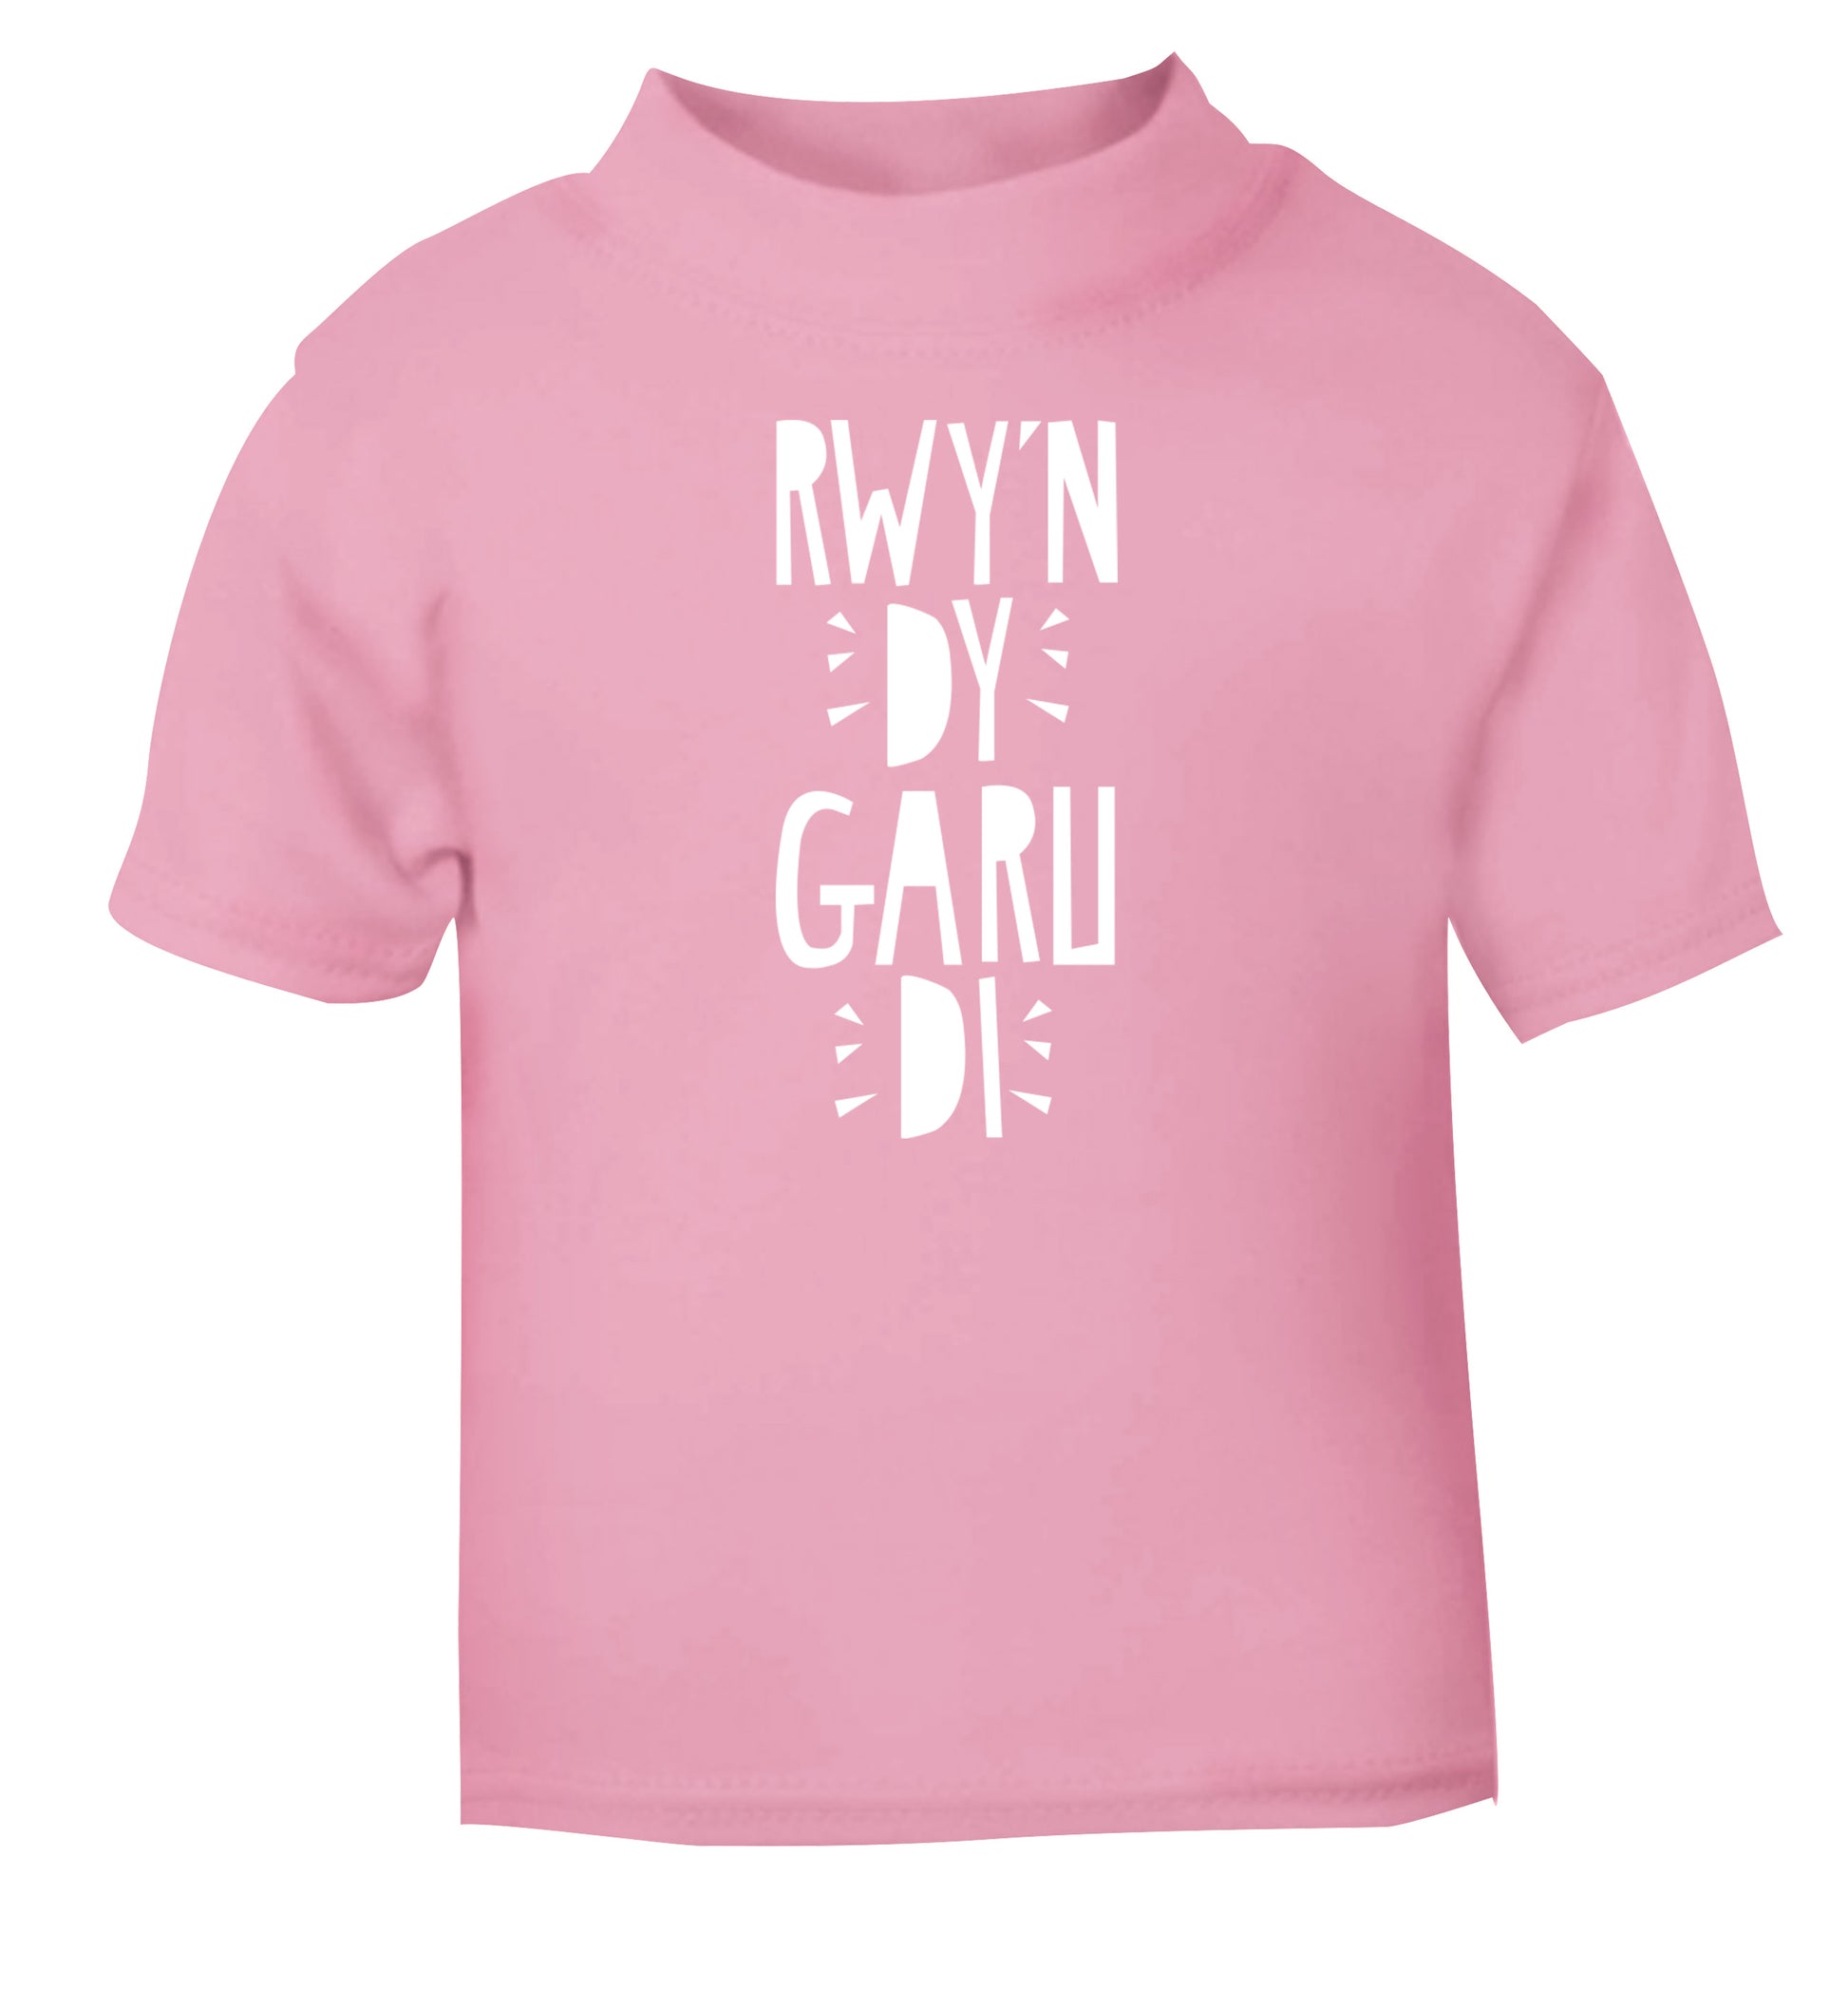 Rwy'n dy garu di - I love you light pink Baby Toddler Tshirt 2 Years